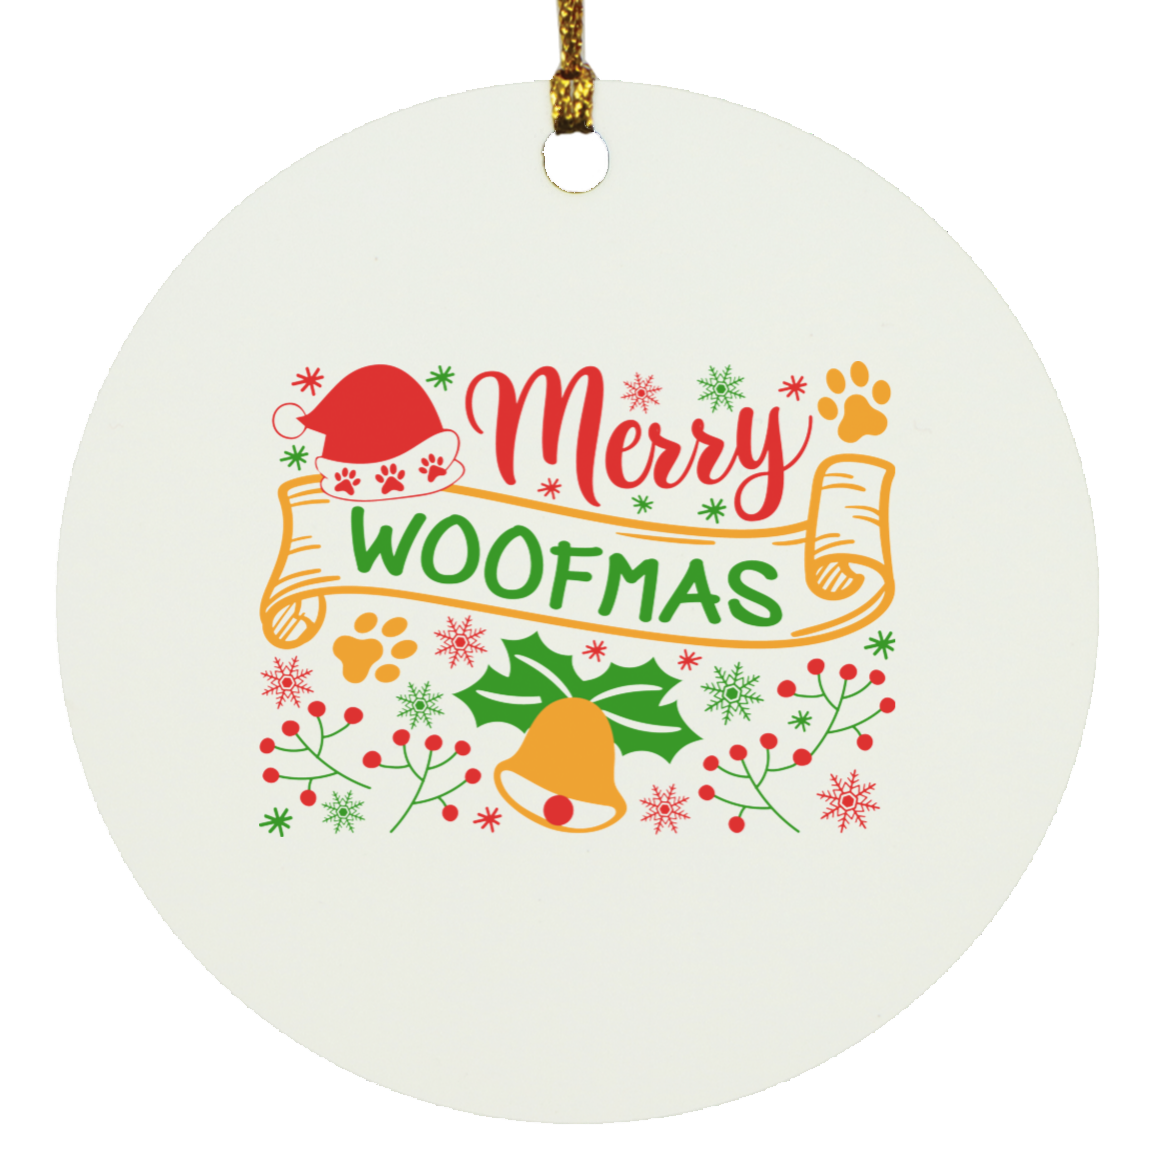 Merry Woofmas Christmas Dog Circle Ornament